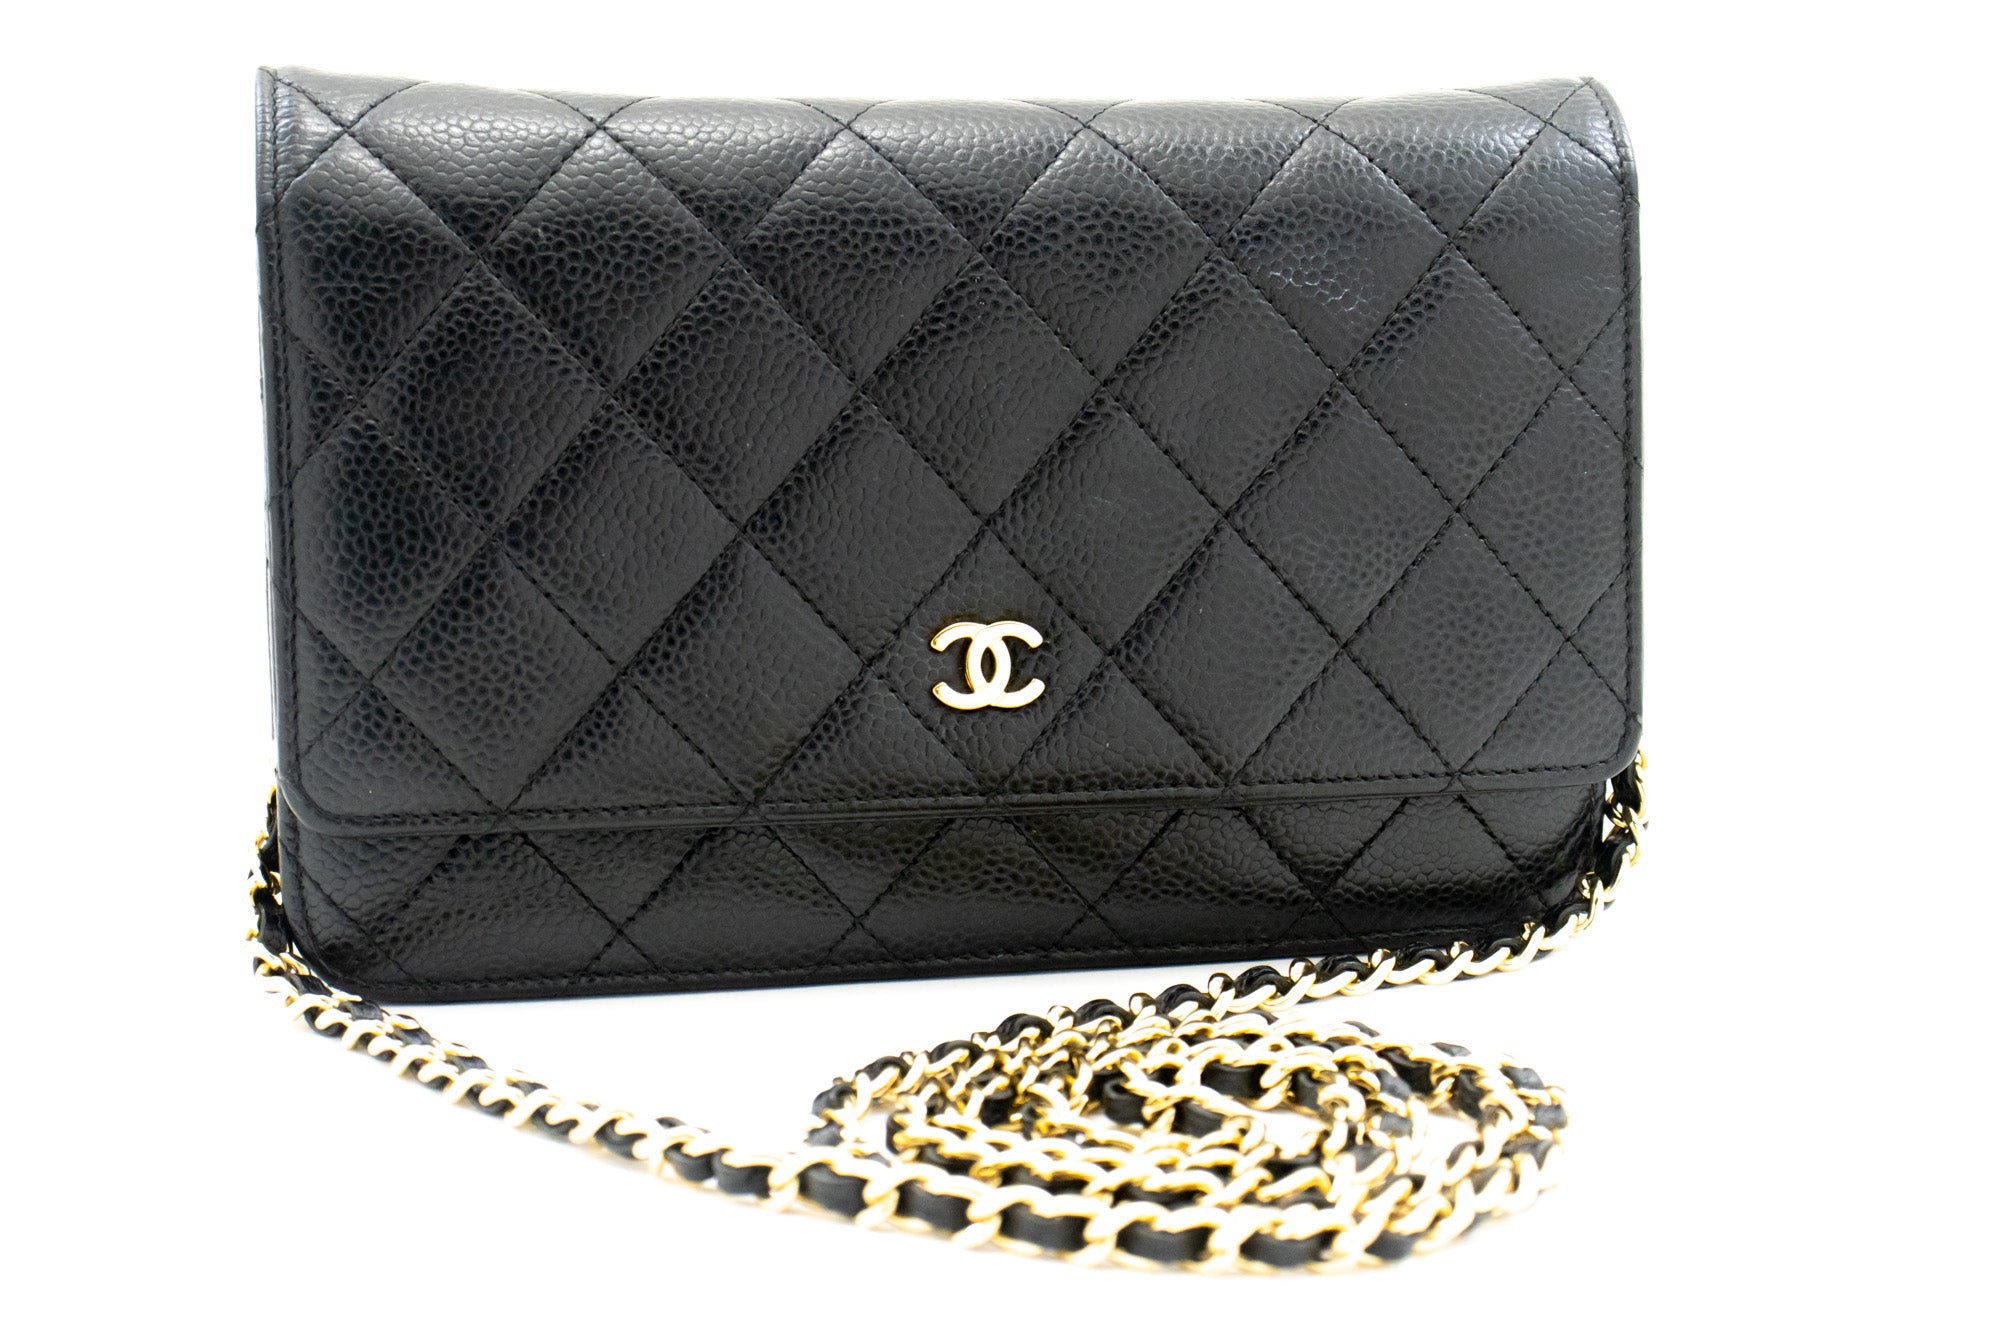 Chanel woc black bag